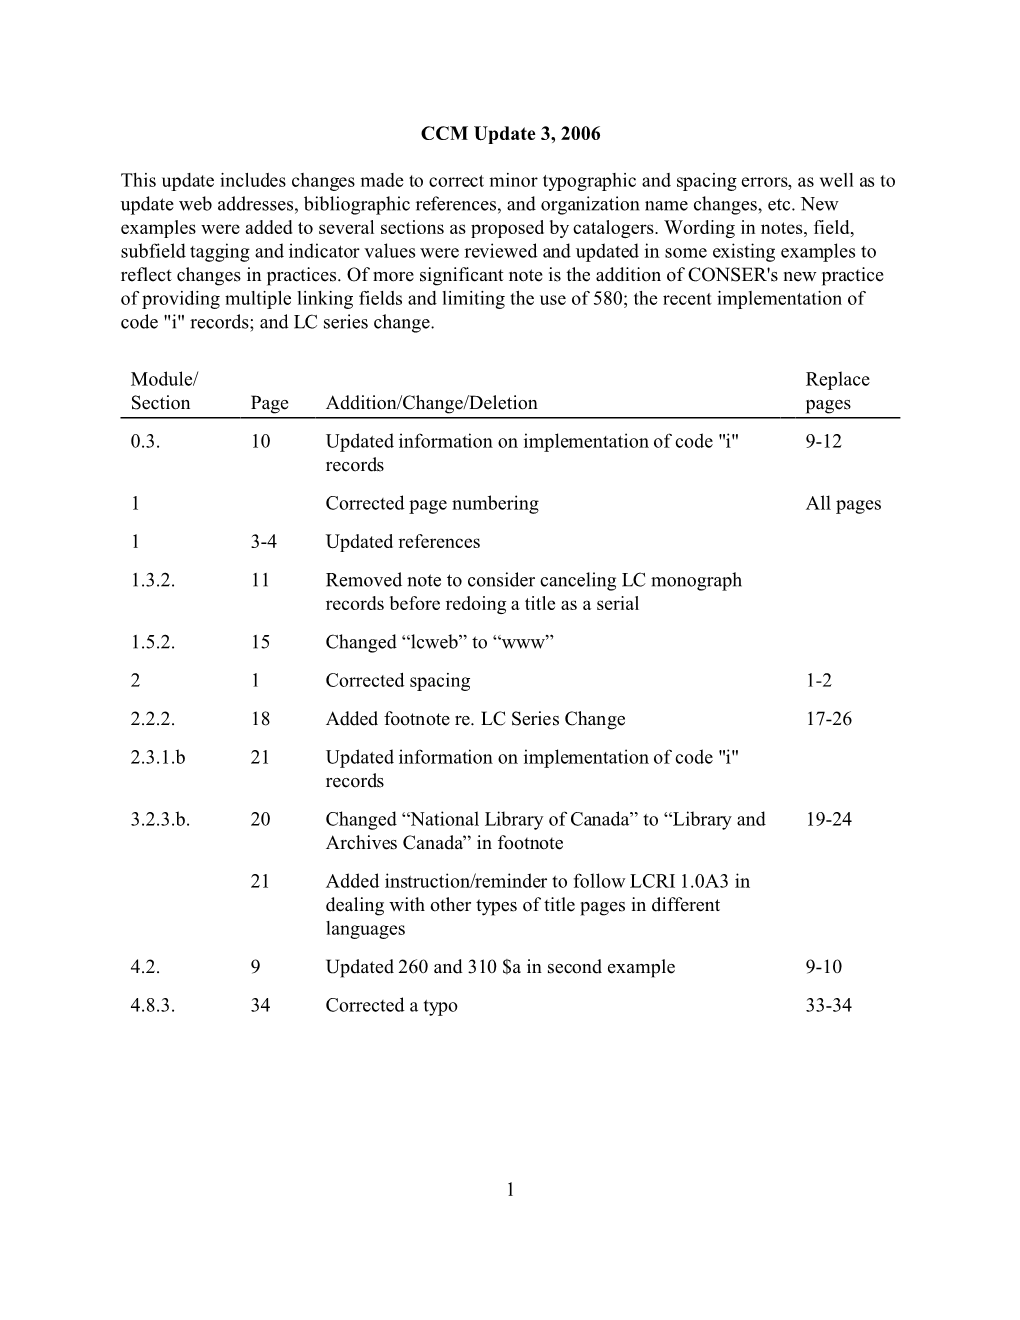 CONSER Cataloging Manual, Update 3 (2006)